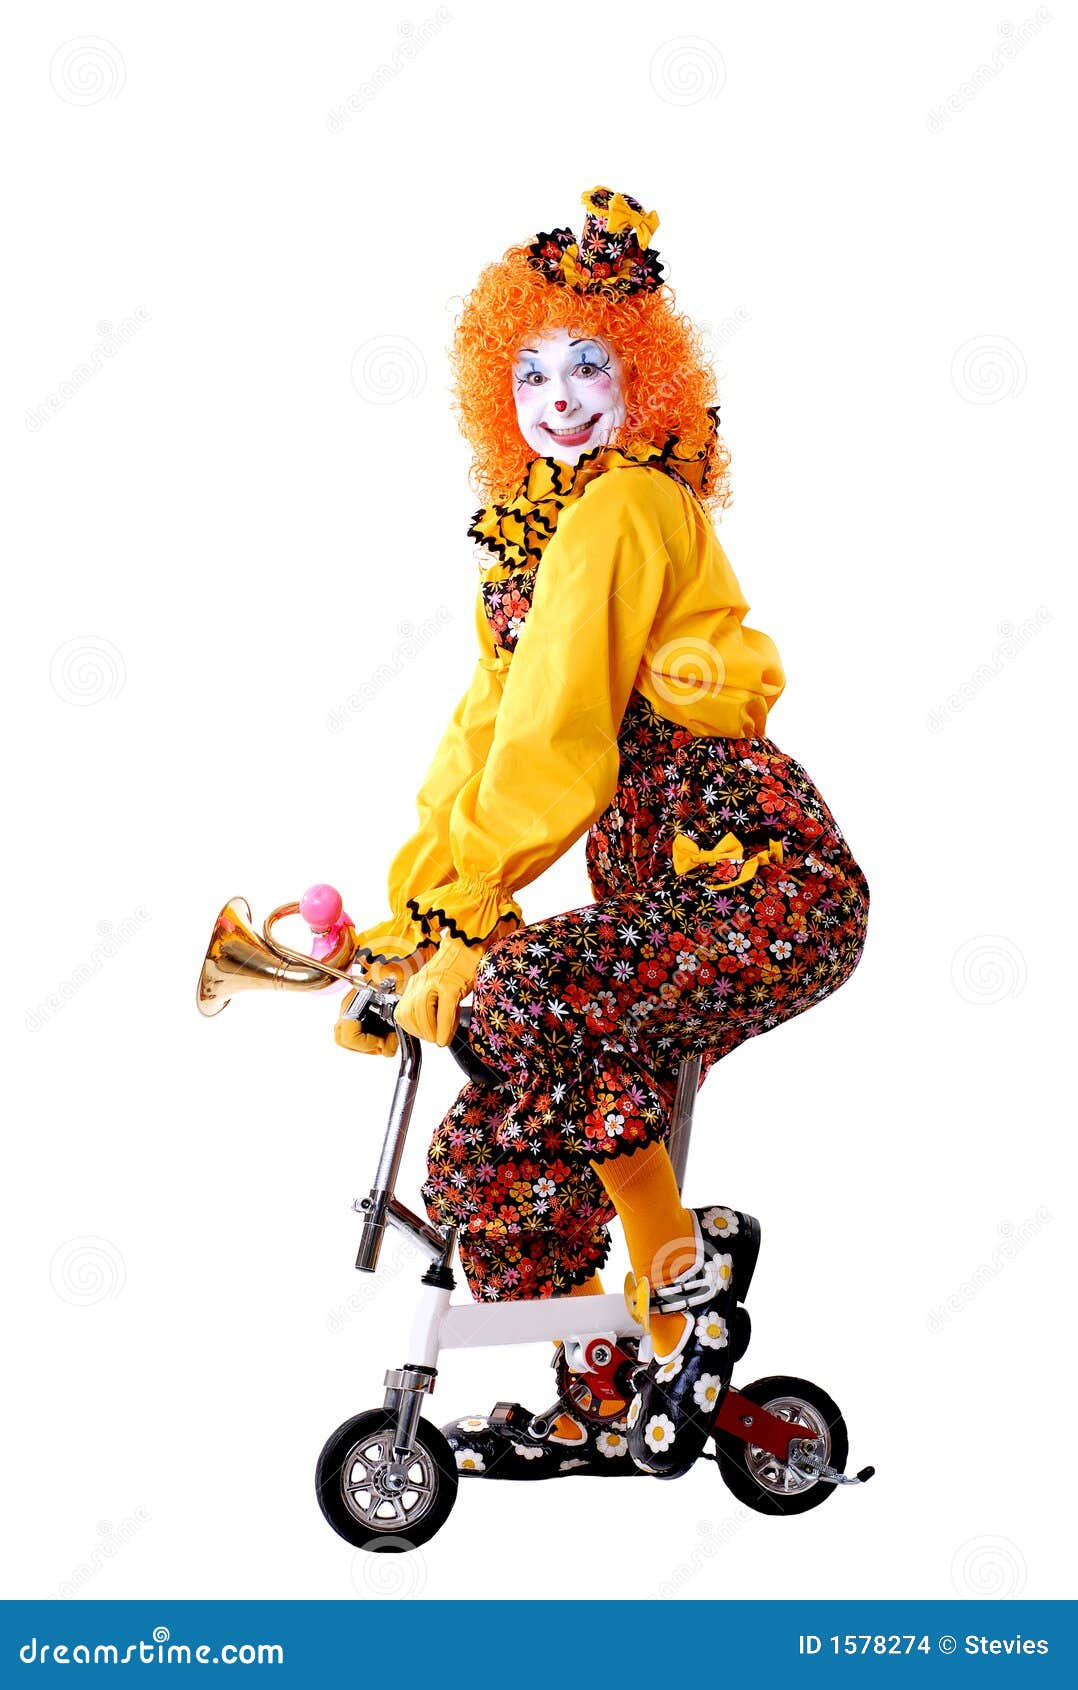 images stock clown de cirque image